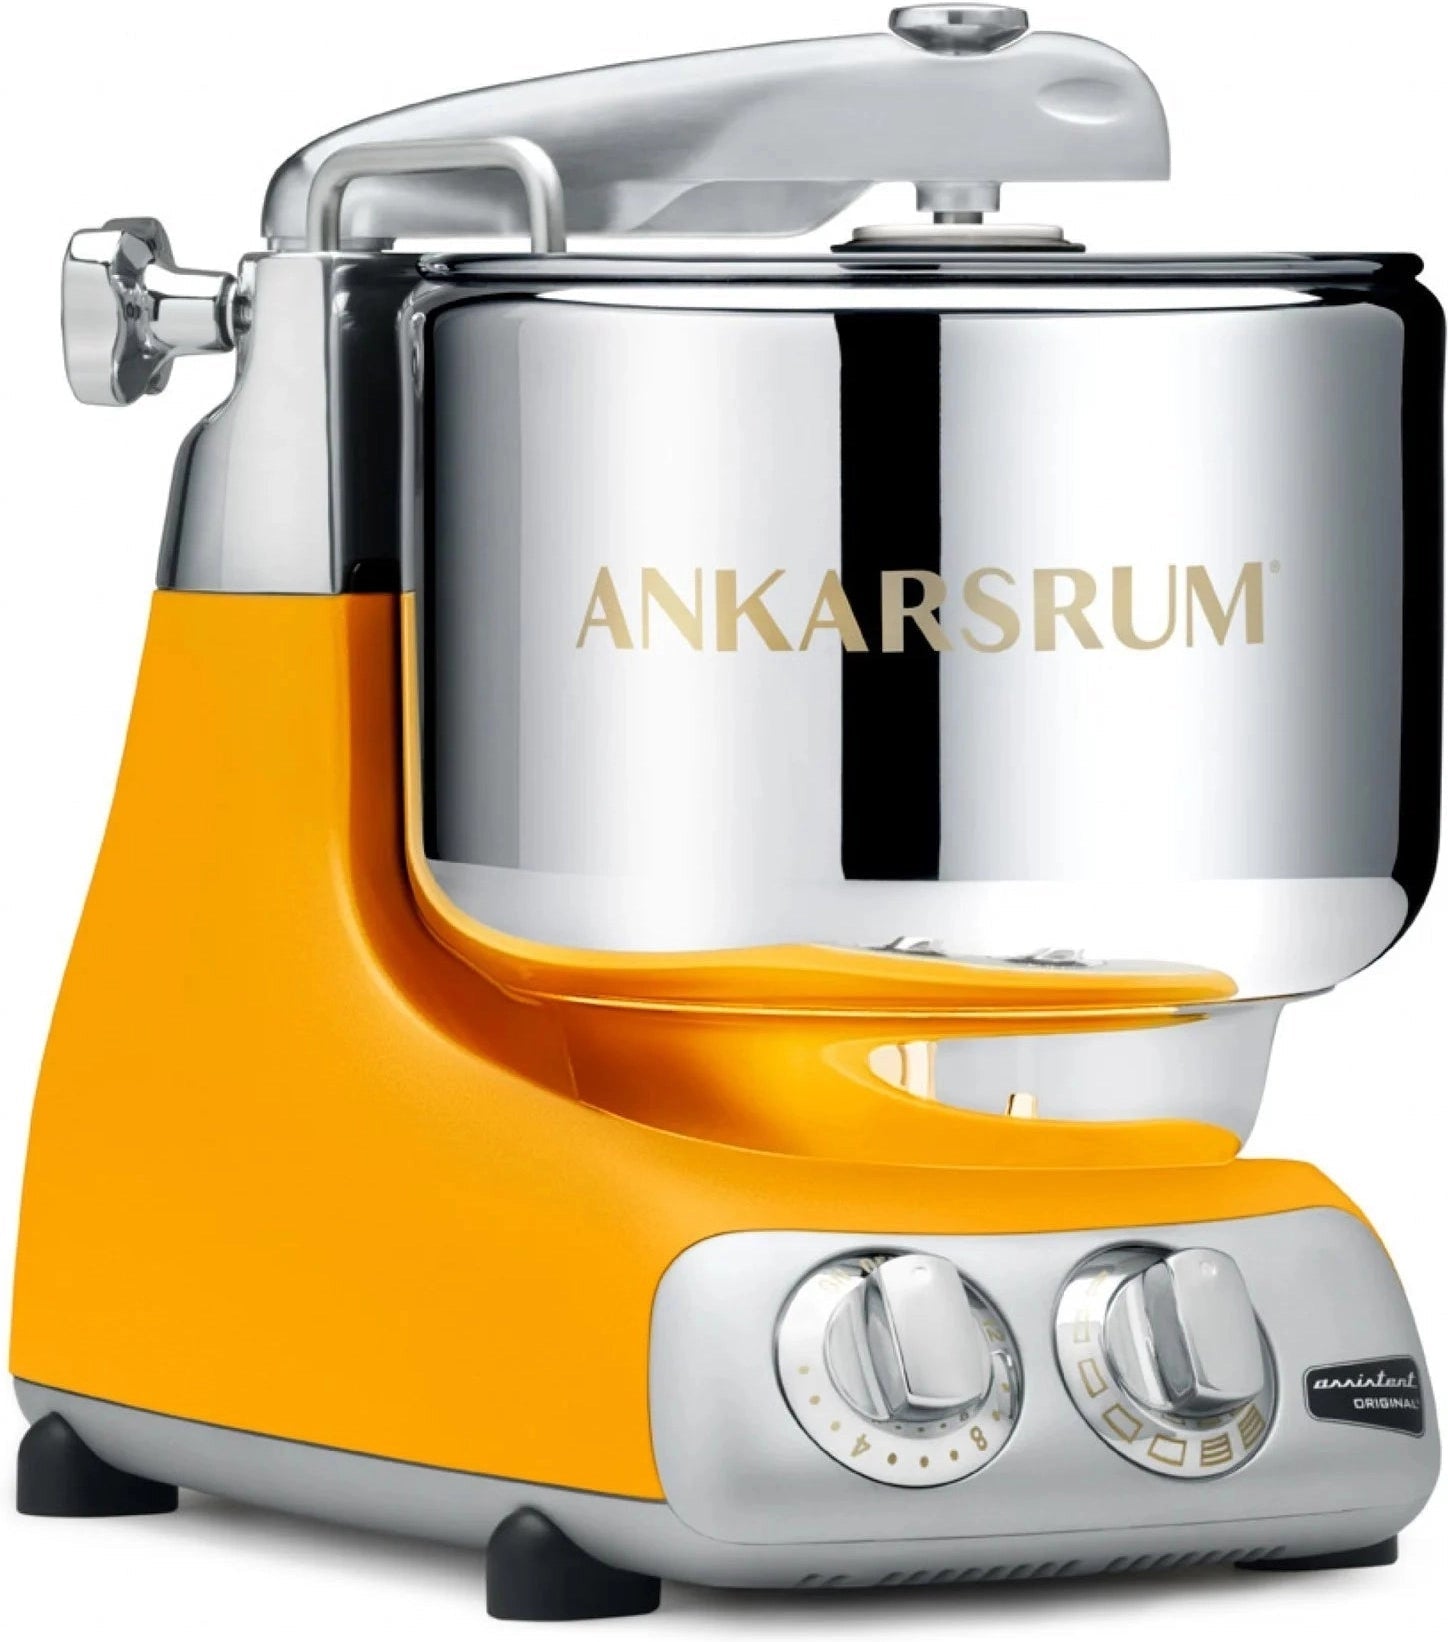 Ankarsrum - 7 L Assistent Original Mixer Sunbeam Yellow (Available in April, Order Now!) - 6230SB